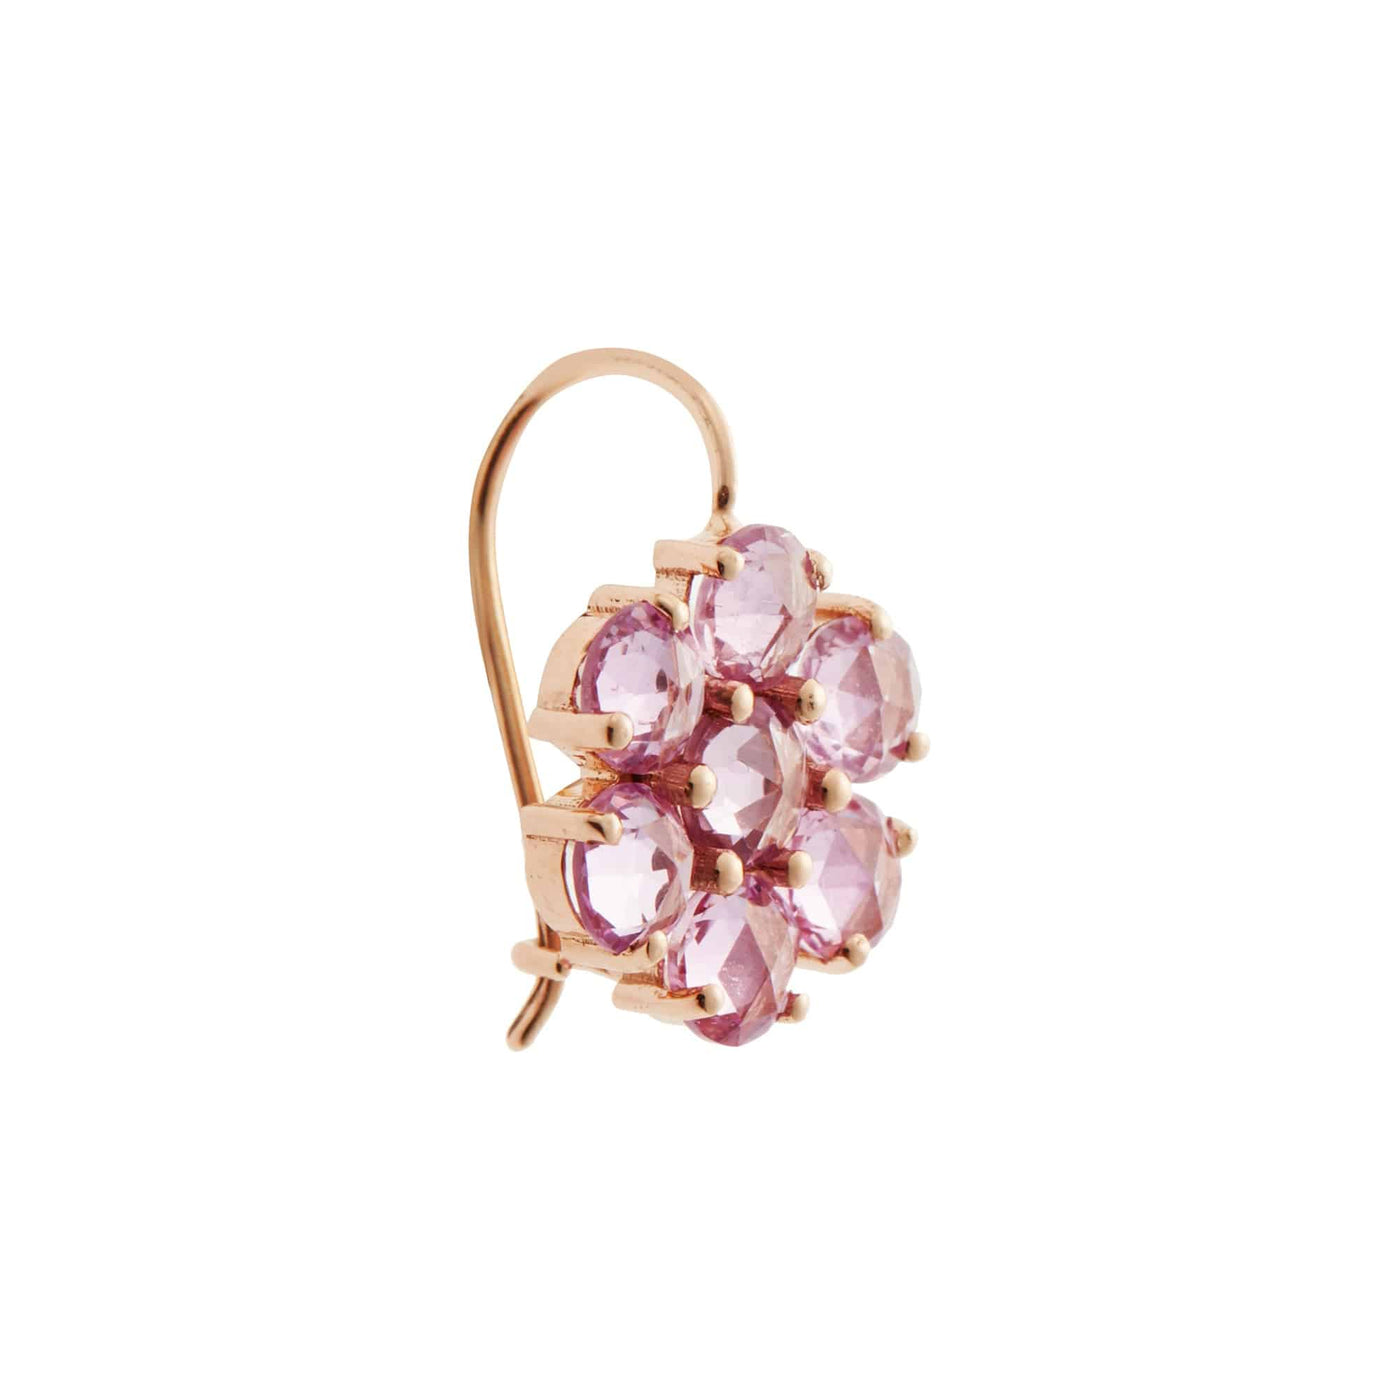 Daisy Bloom Earrings P-PS - Florescence - Ileana Makri store